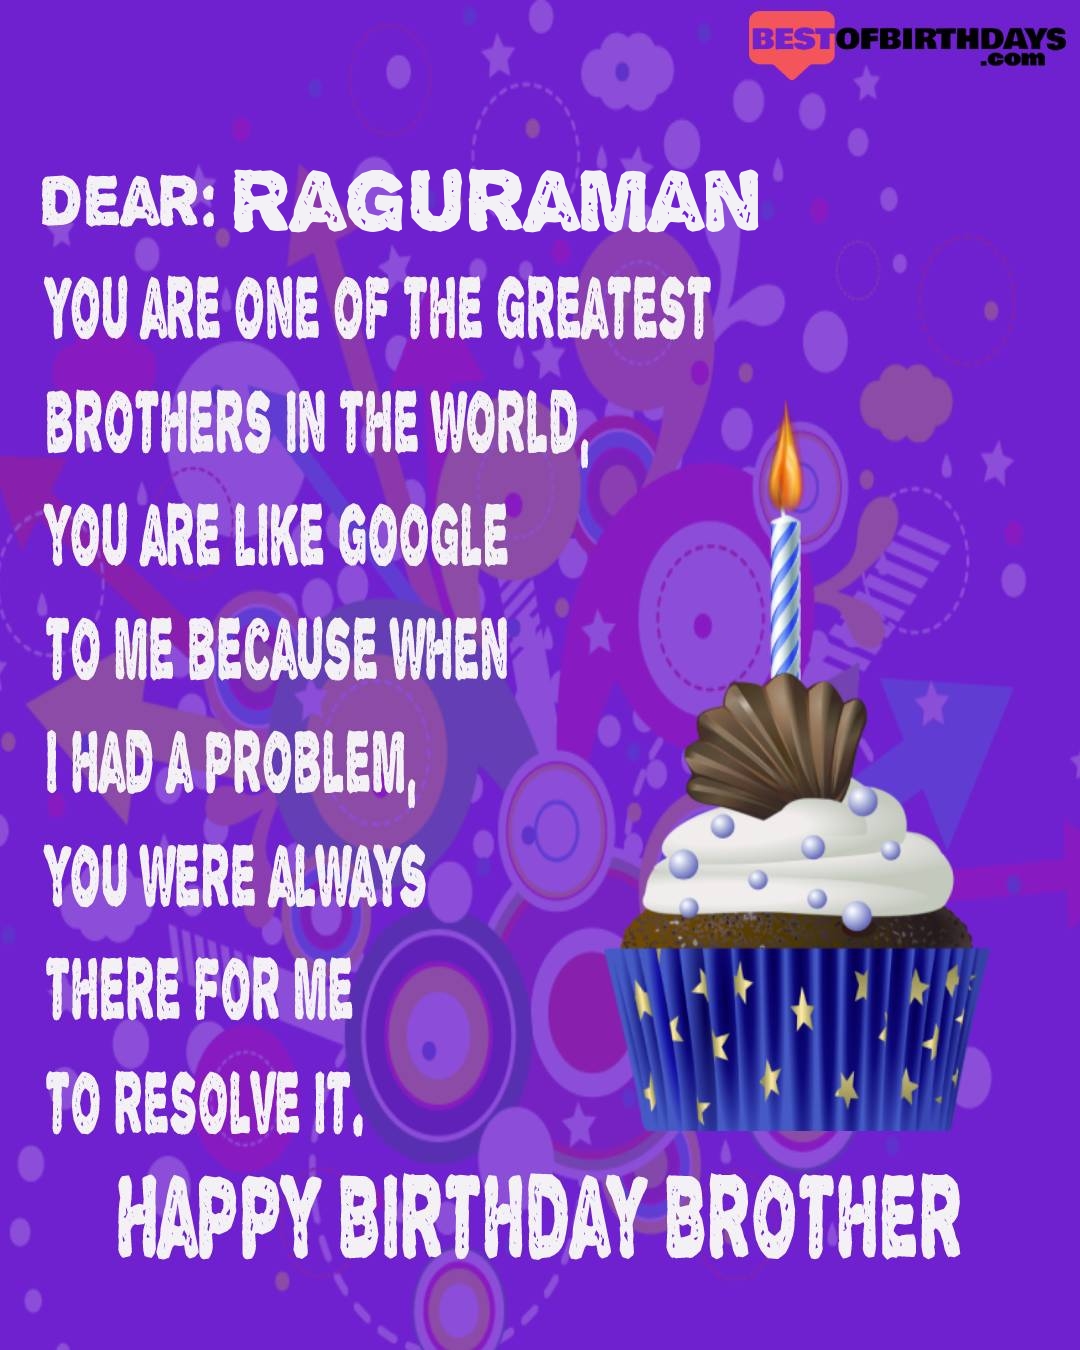 Happy birthday raguraman bhai brother bro